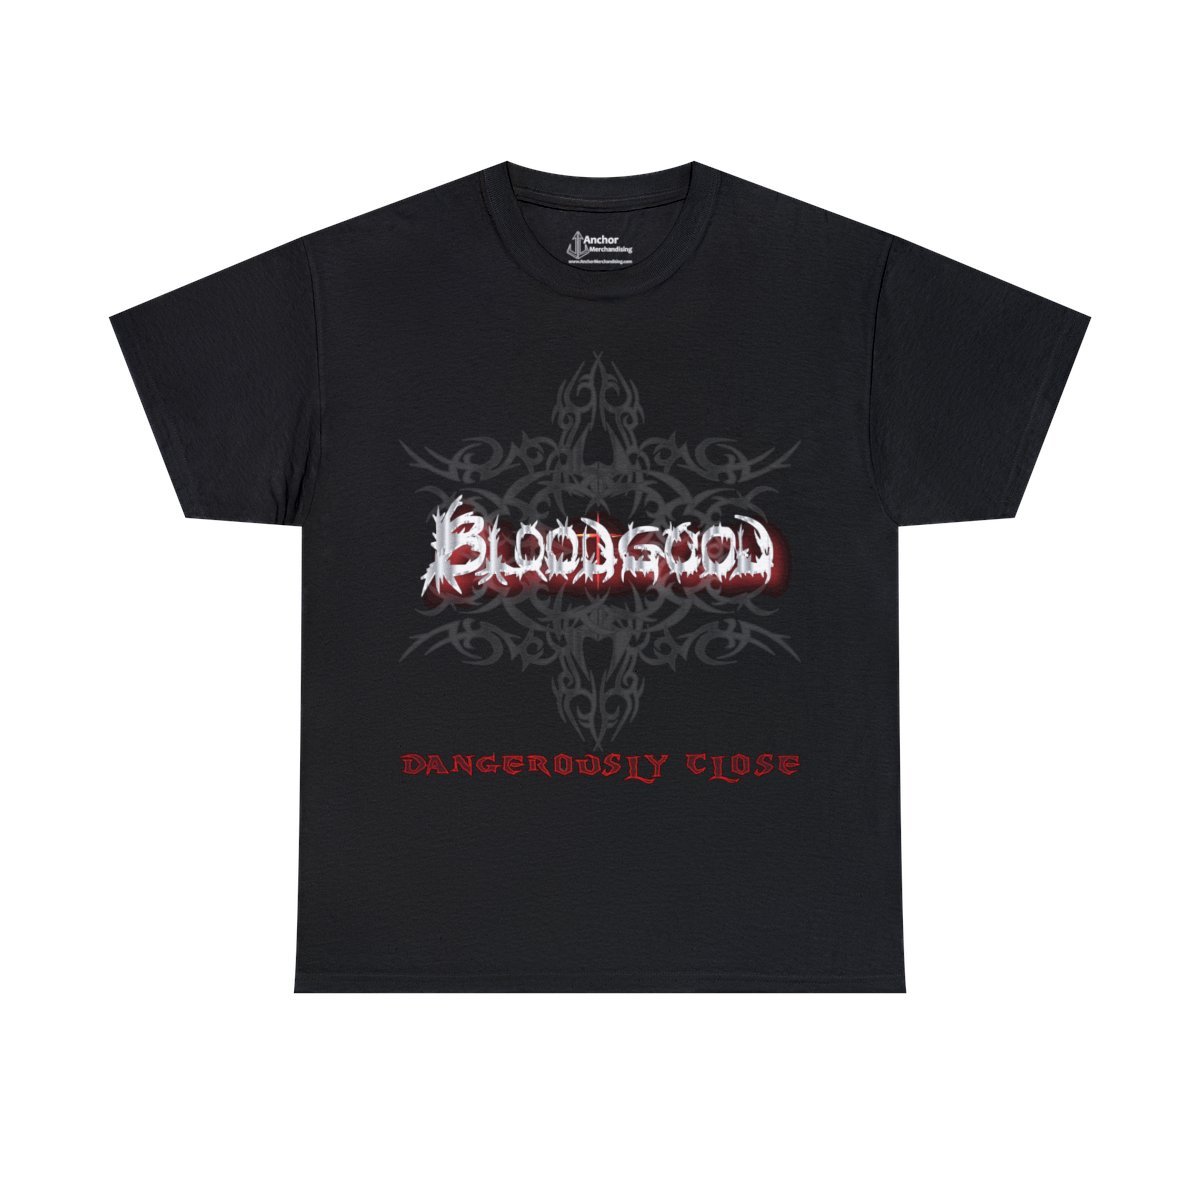 Bloodgood – Dangerously Close Clean Version Short Sleeve Tshirt